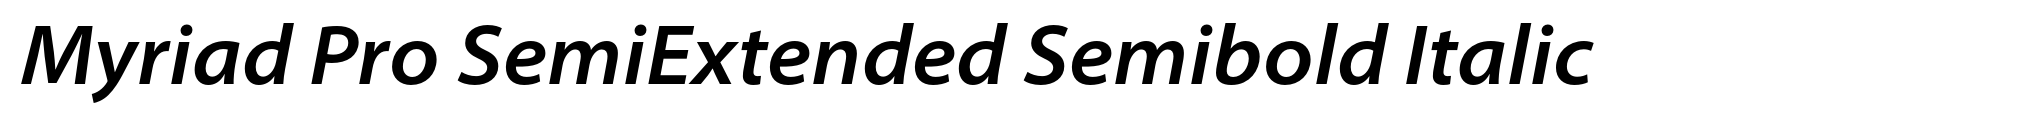 Myriad Pro SemiExtended Semibold Italic image